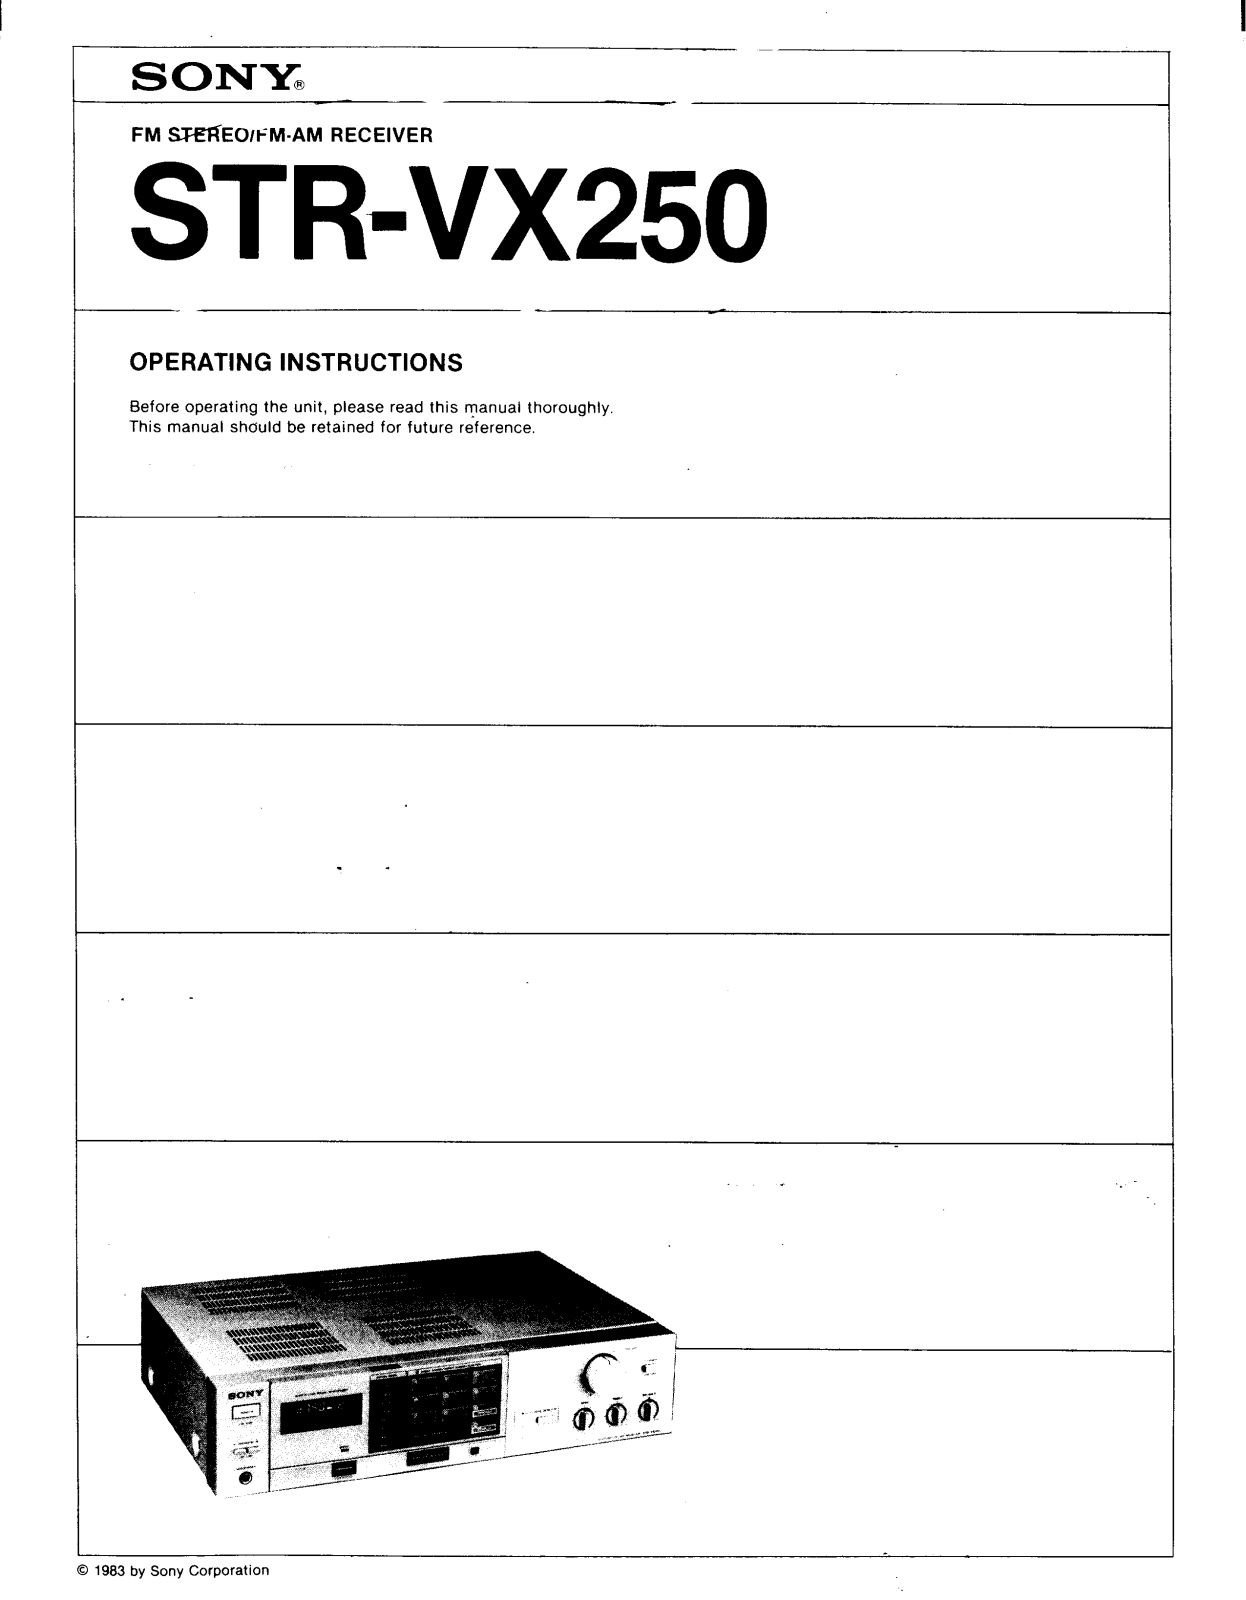 Sony ST-RVX250 User Manual